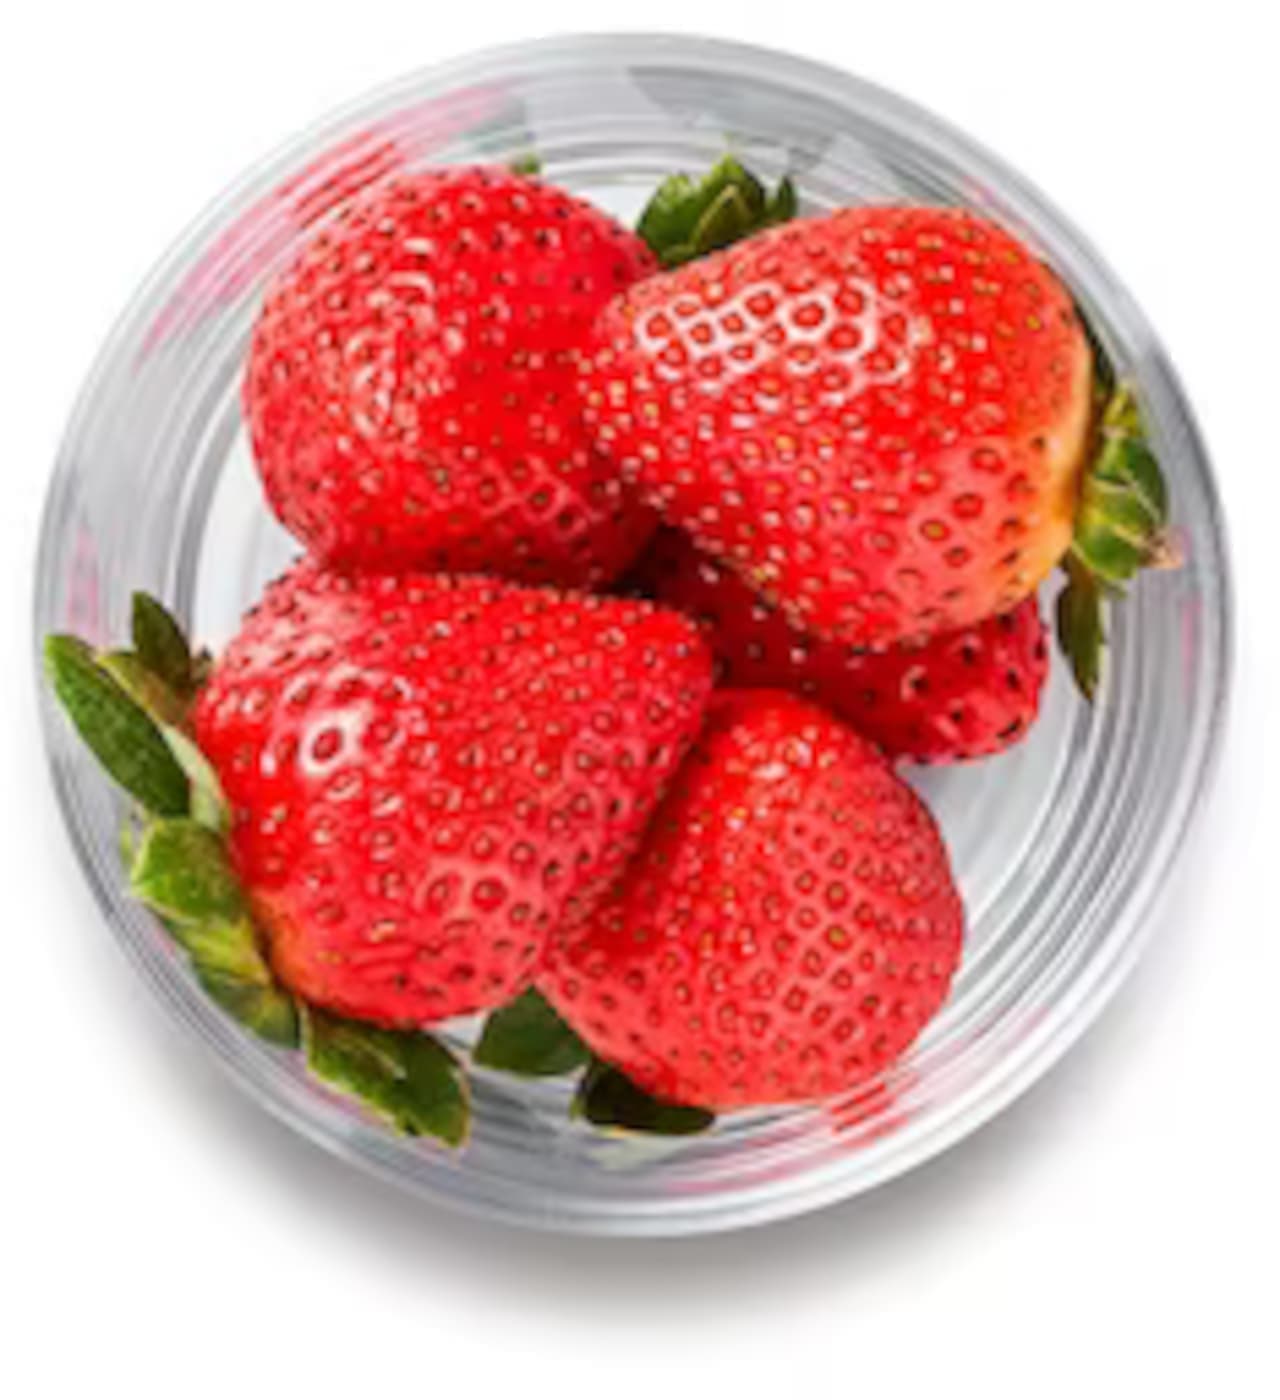 IKEA "Fresh Strawberries